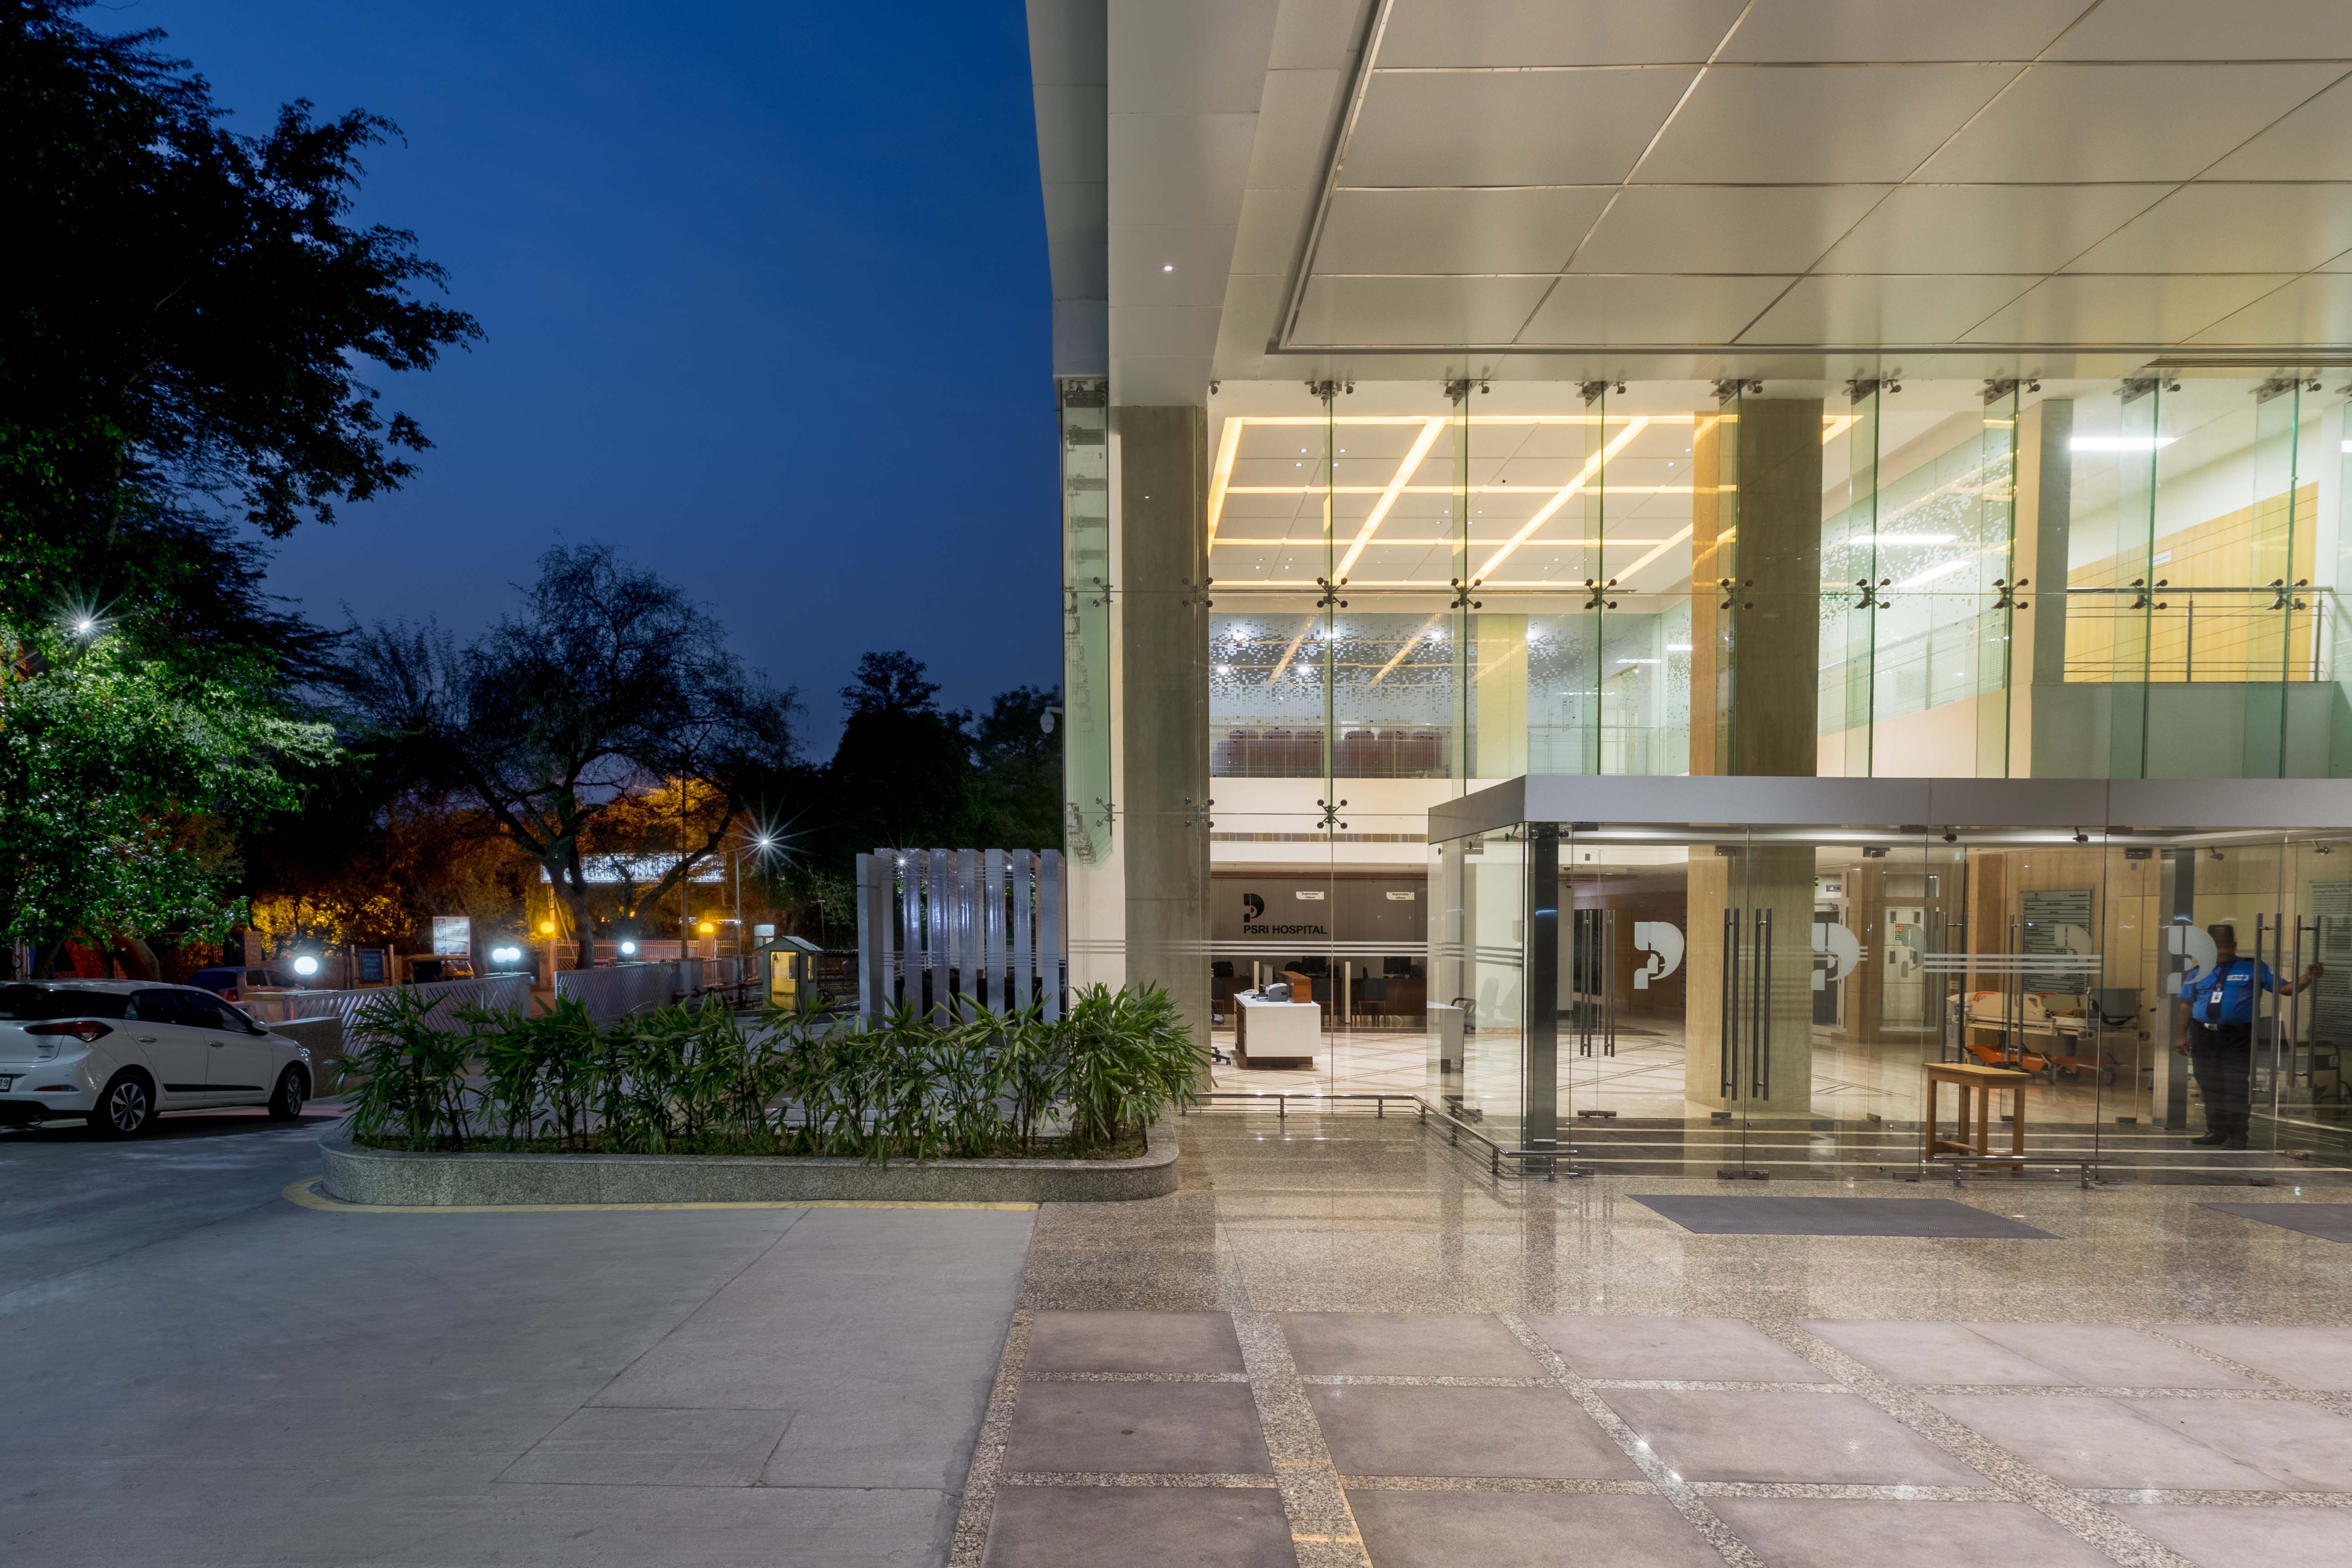 PSRI Multi-specialty hospital at New Delhi by Creative Designer Architects